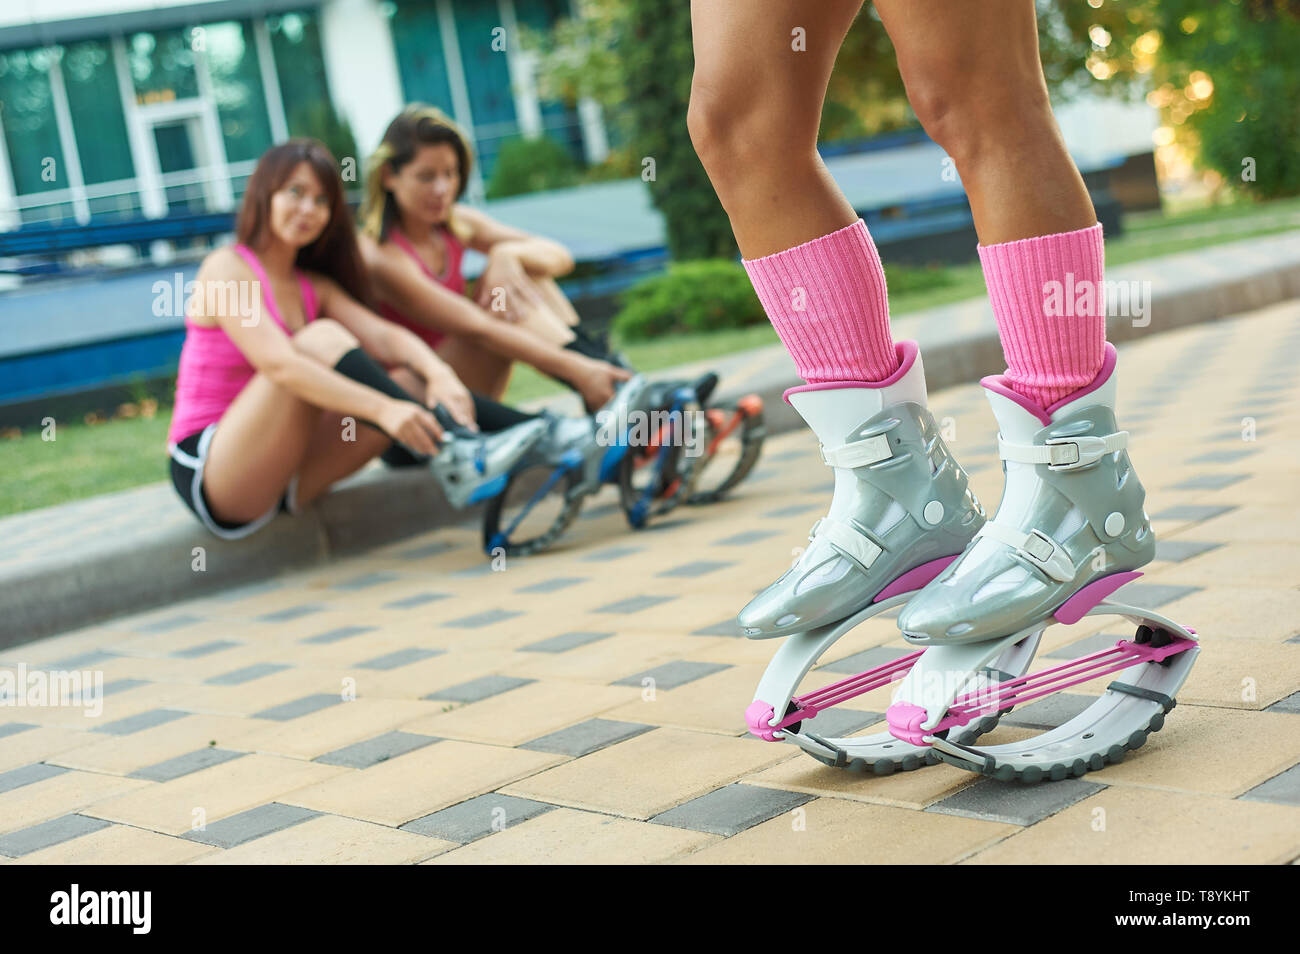 Kangoo saltando gimnasio equipo femenino en botas. con fondo borroso concepto de entrenamiento deportivo Fotografía stock - Alamy